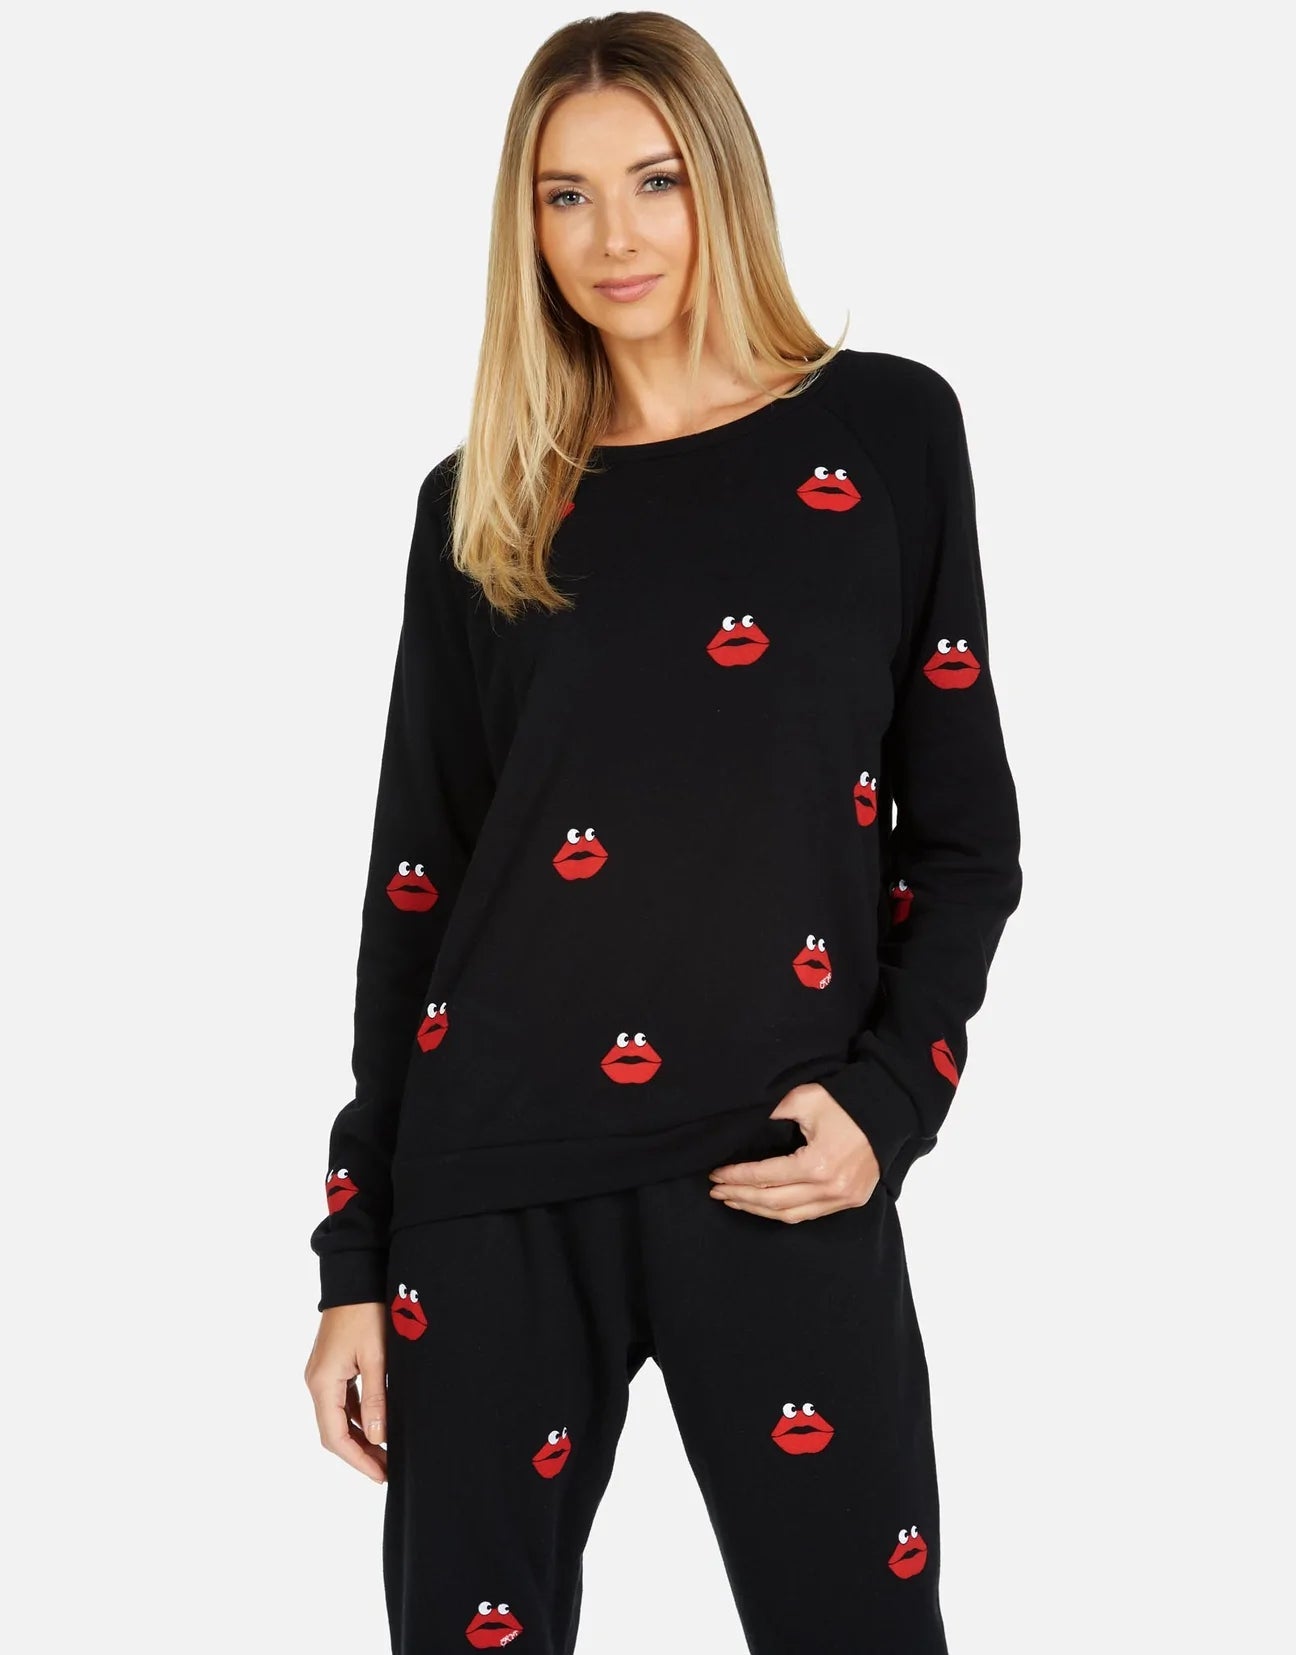 Shop Lauren Moshi Noleta Kiss Face Sweater - Premium Pullover from Lauren Moshi Online now at Spoiled Brat 